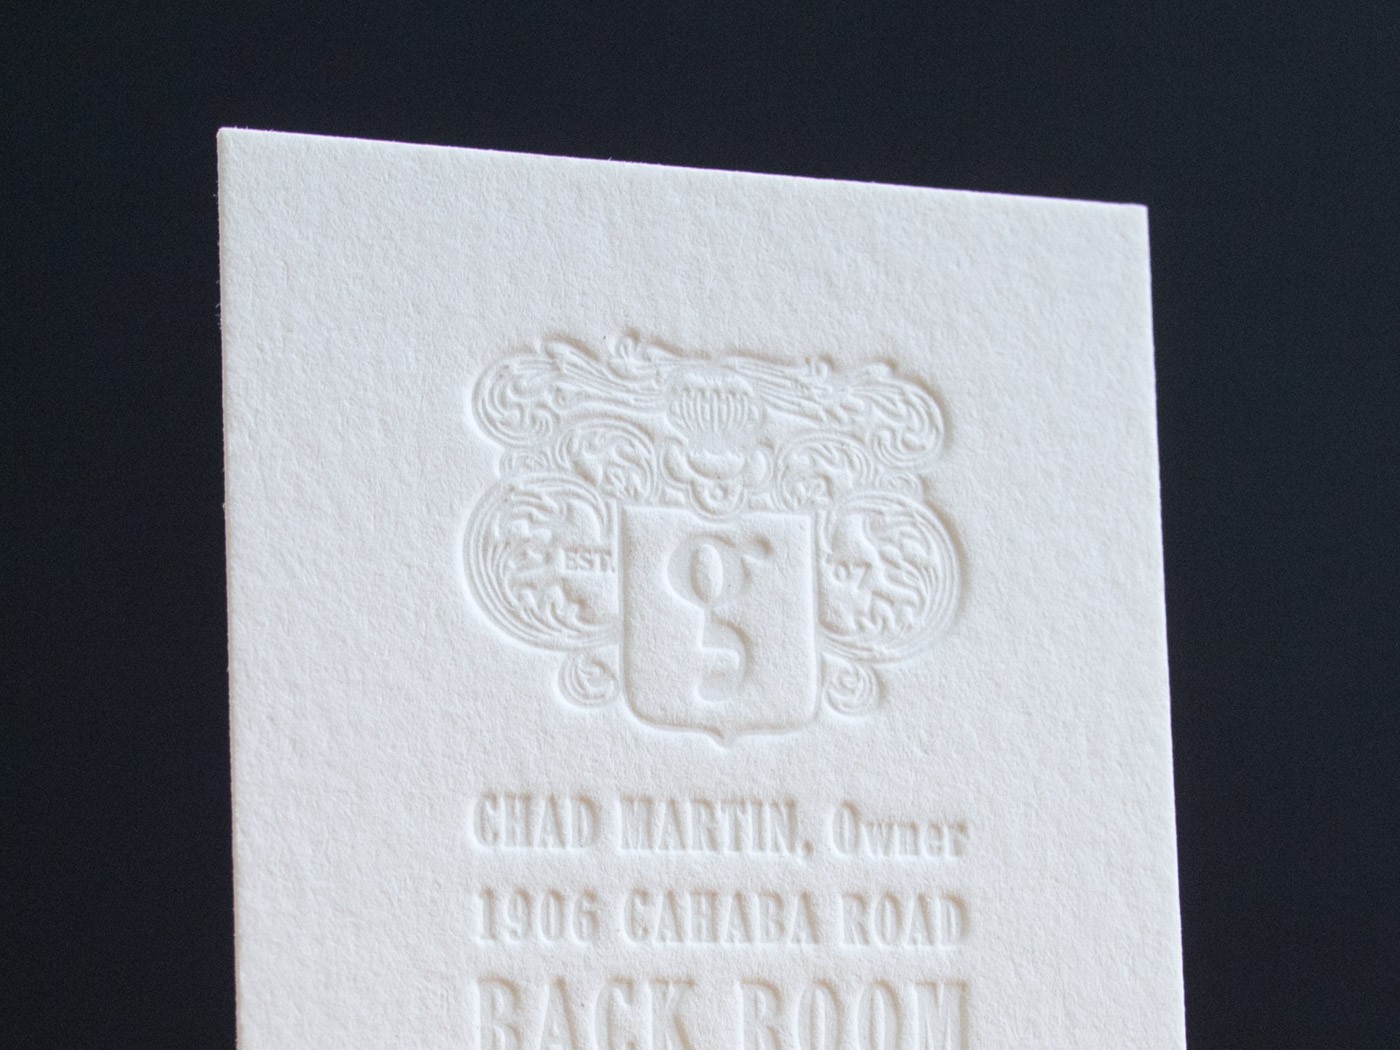 Chad Martin | Printed by Parklife Press